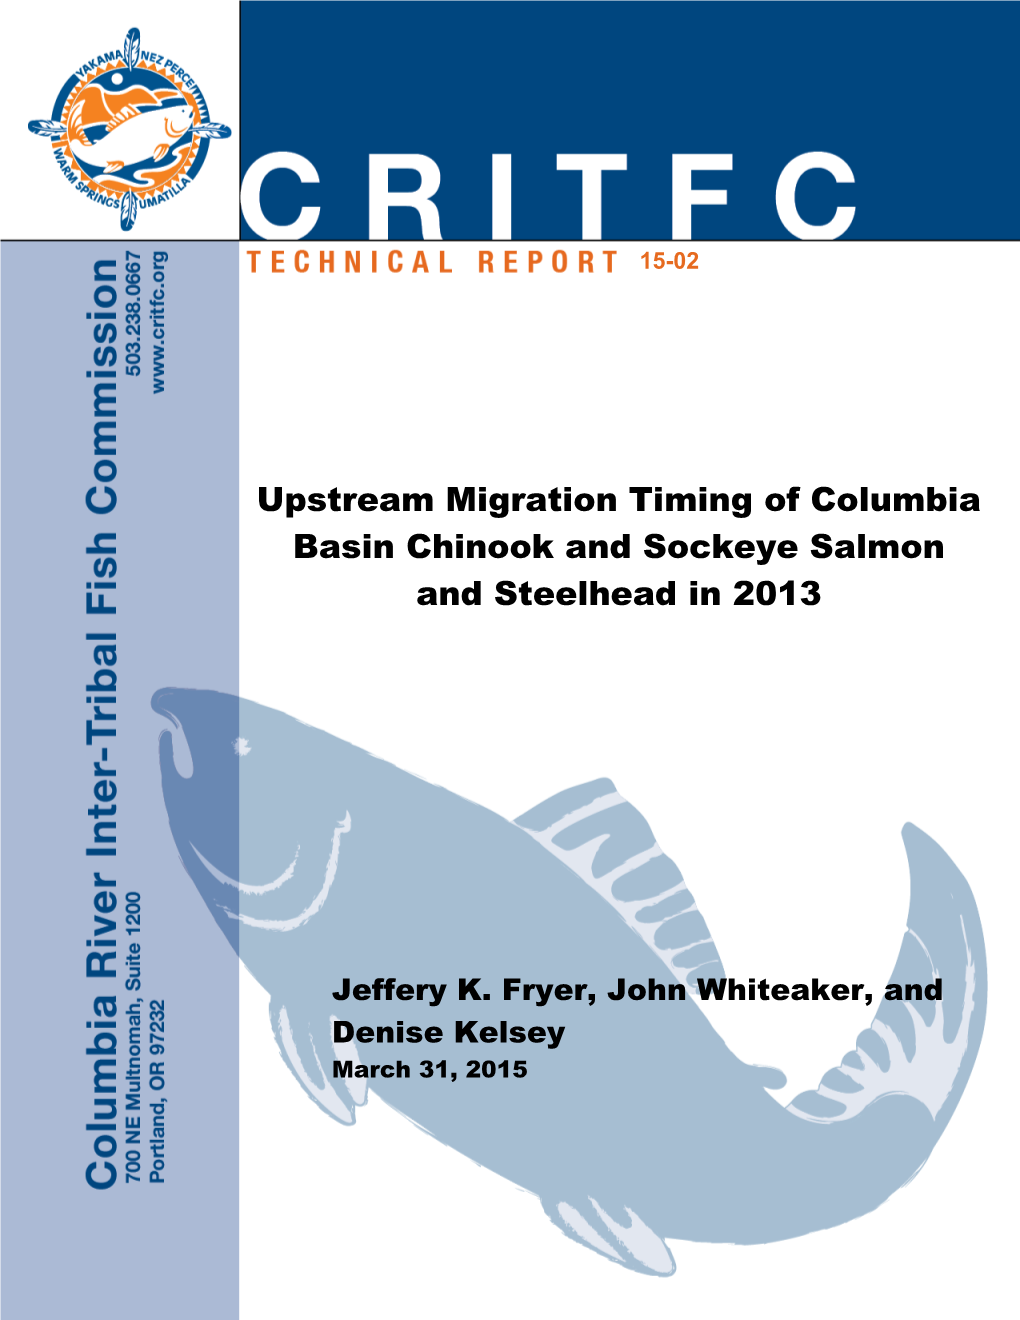 Upstream Migration Timing of Columbia Basin Chinook and Sockeye Salmon and Steelhead in 2013